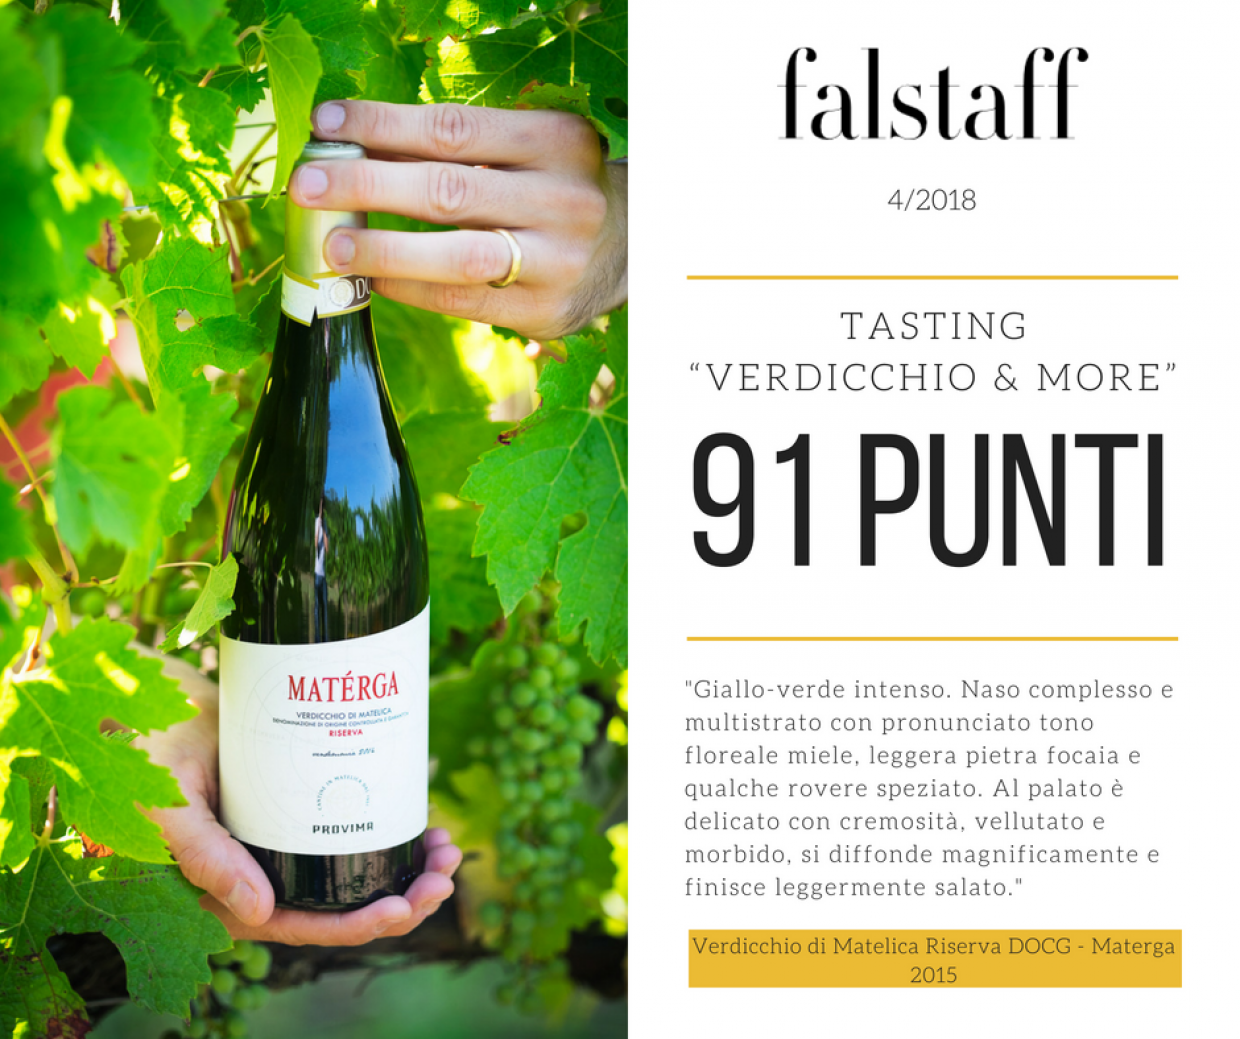 Verdicchio&More: 91 points for the Materga 2015 at the Falstaff tasting